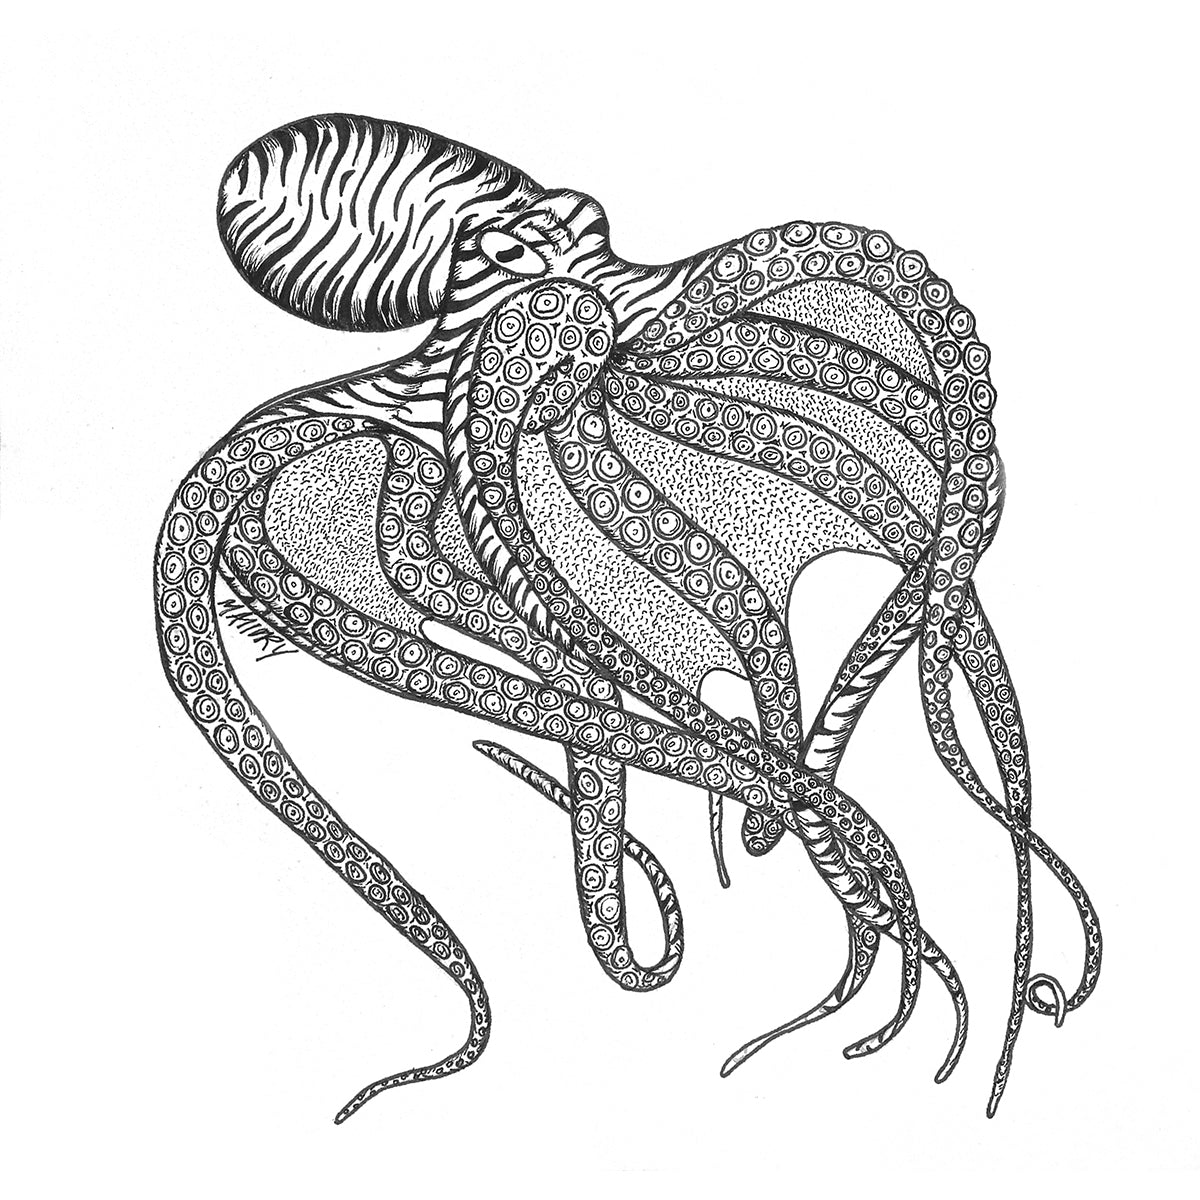 Octopus Illustration 8x10" Print